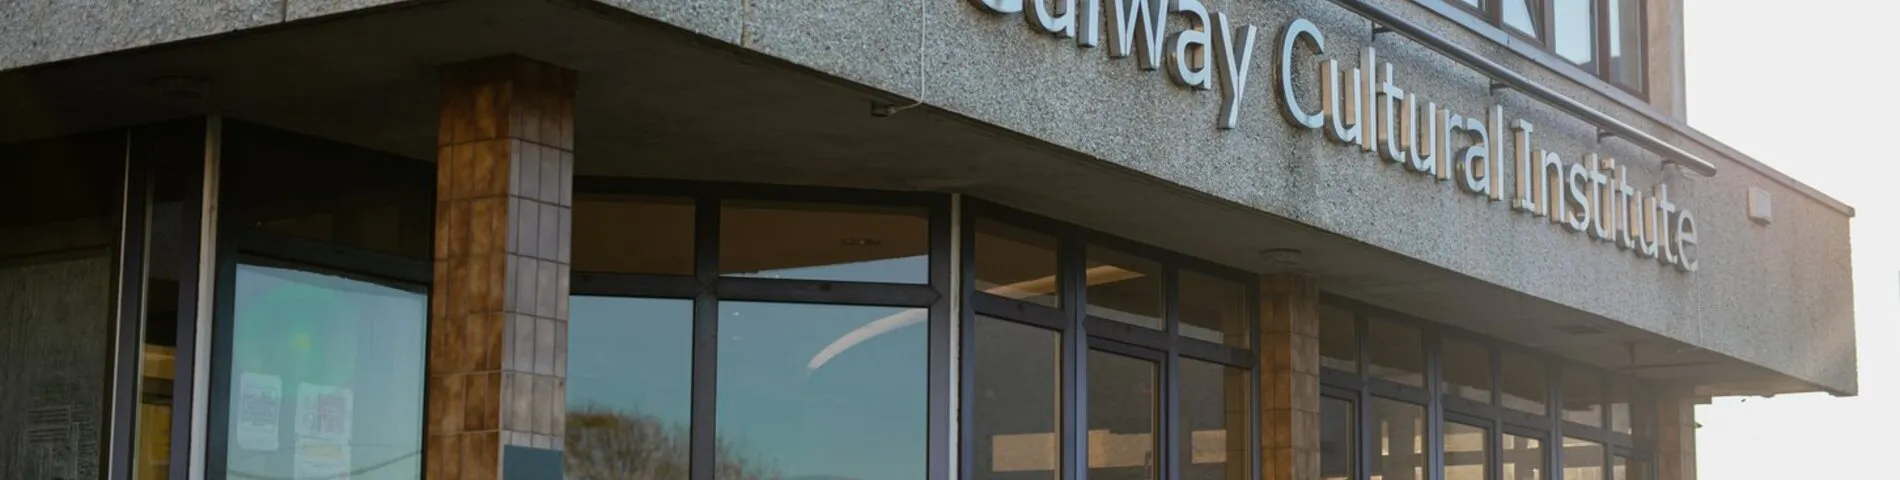 Galway Cultural Institute afbeelding 1